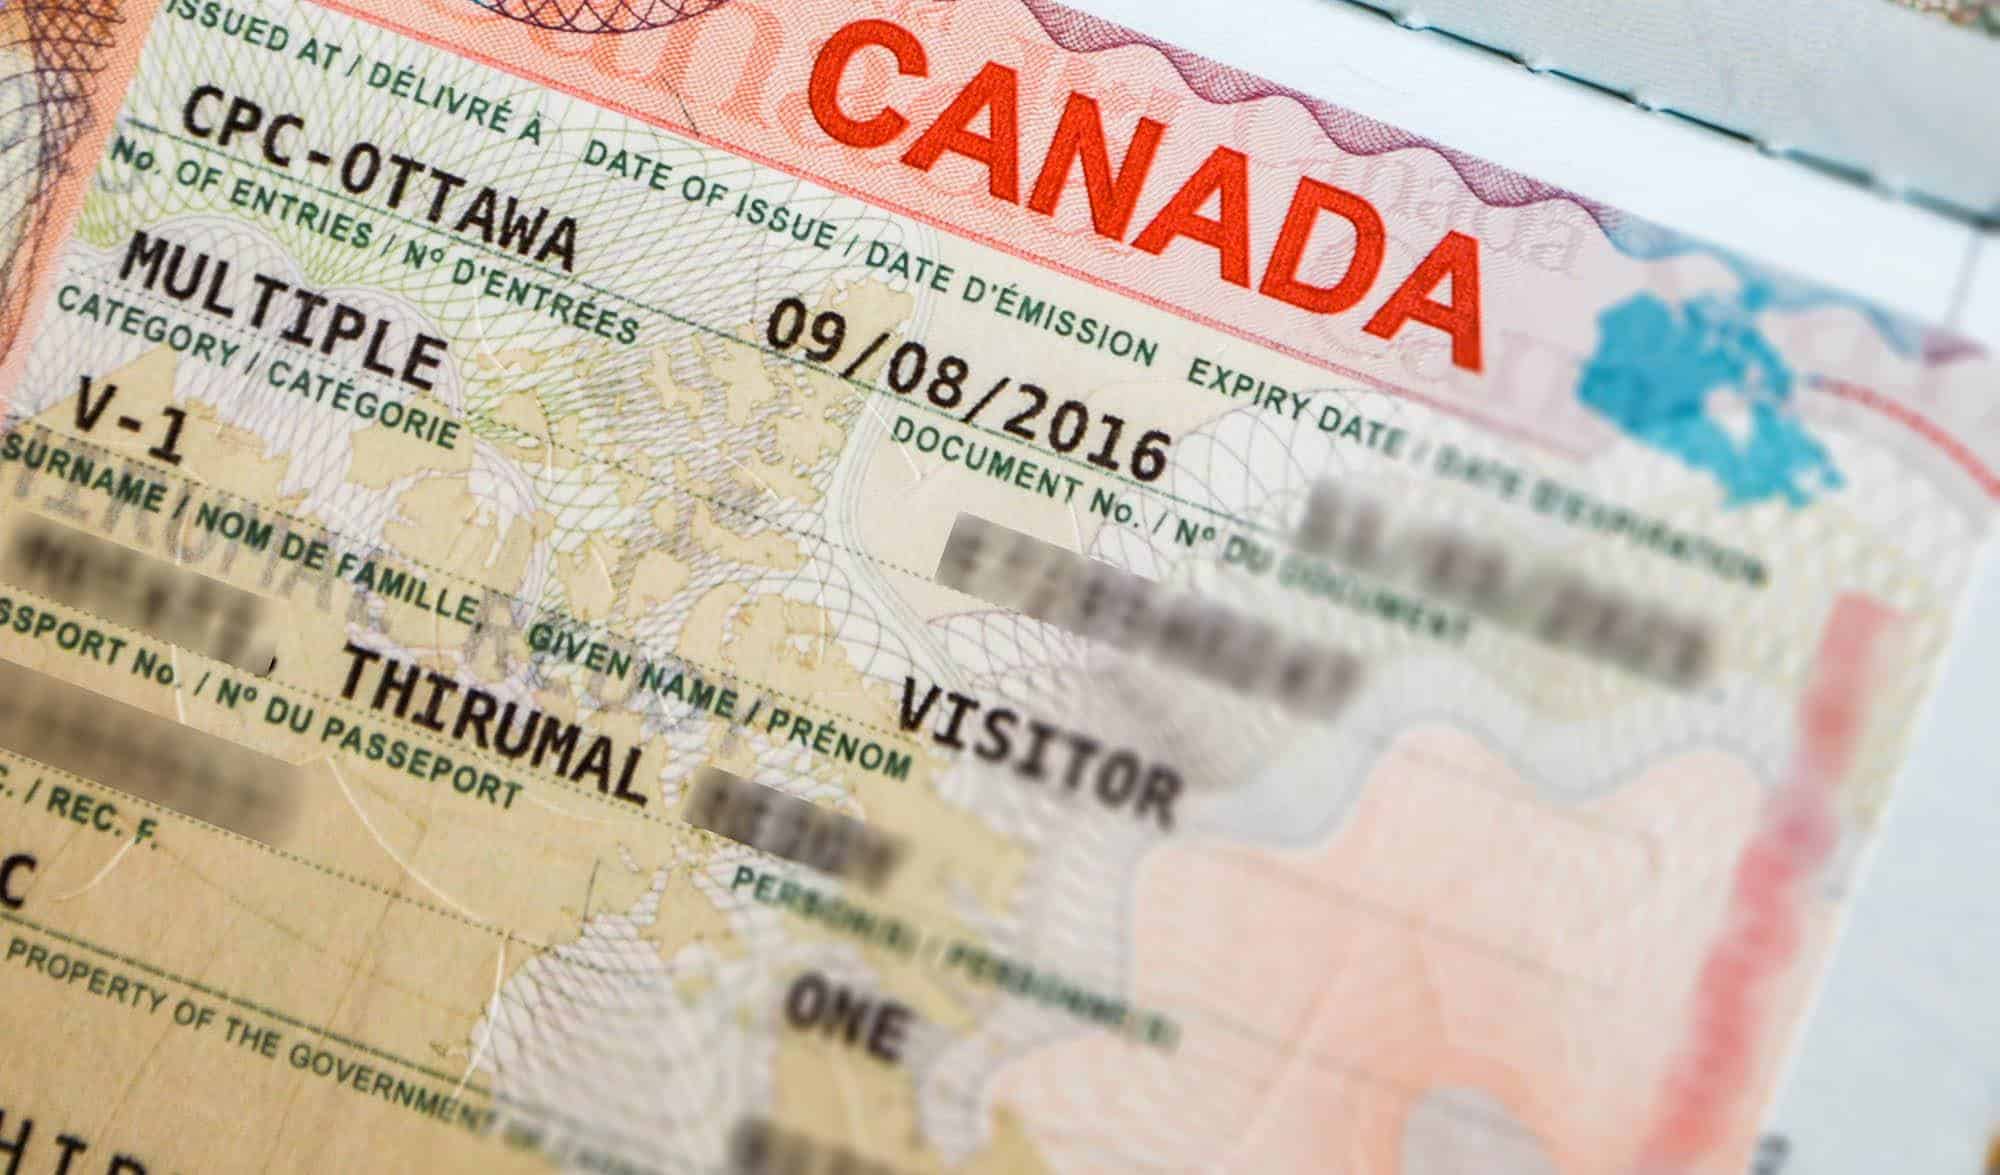 Why many are denied visa